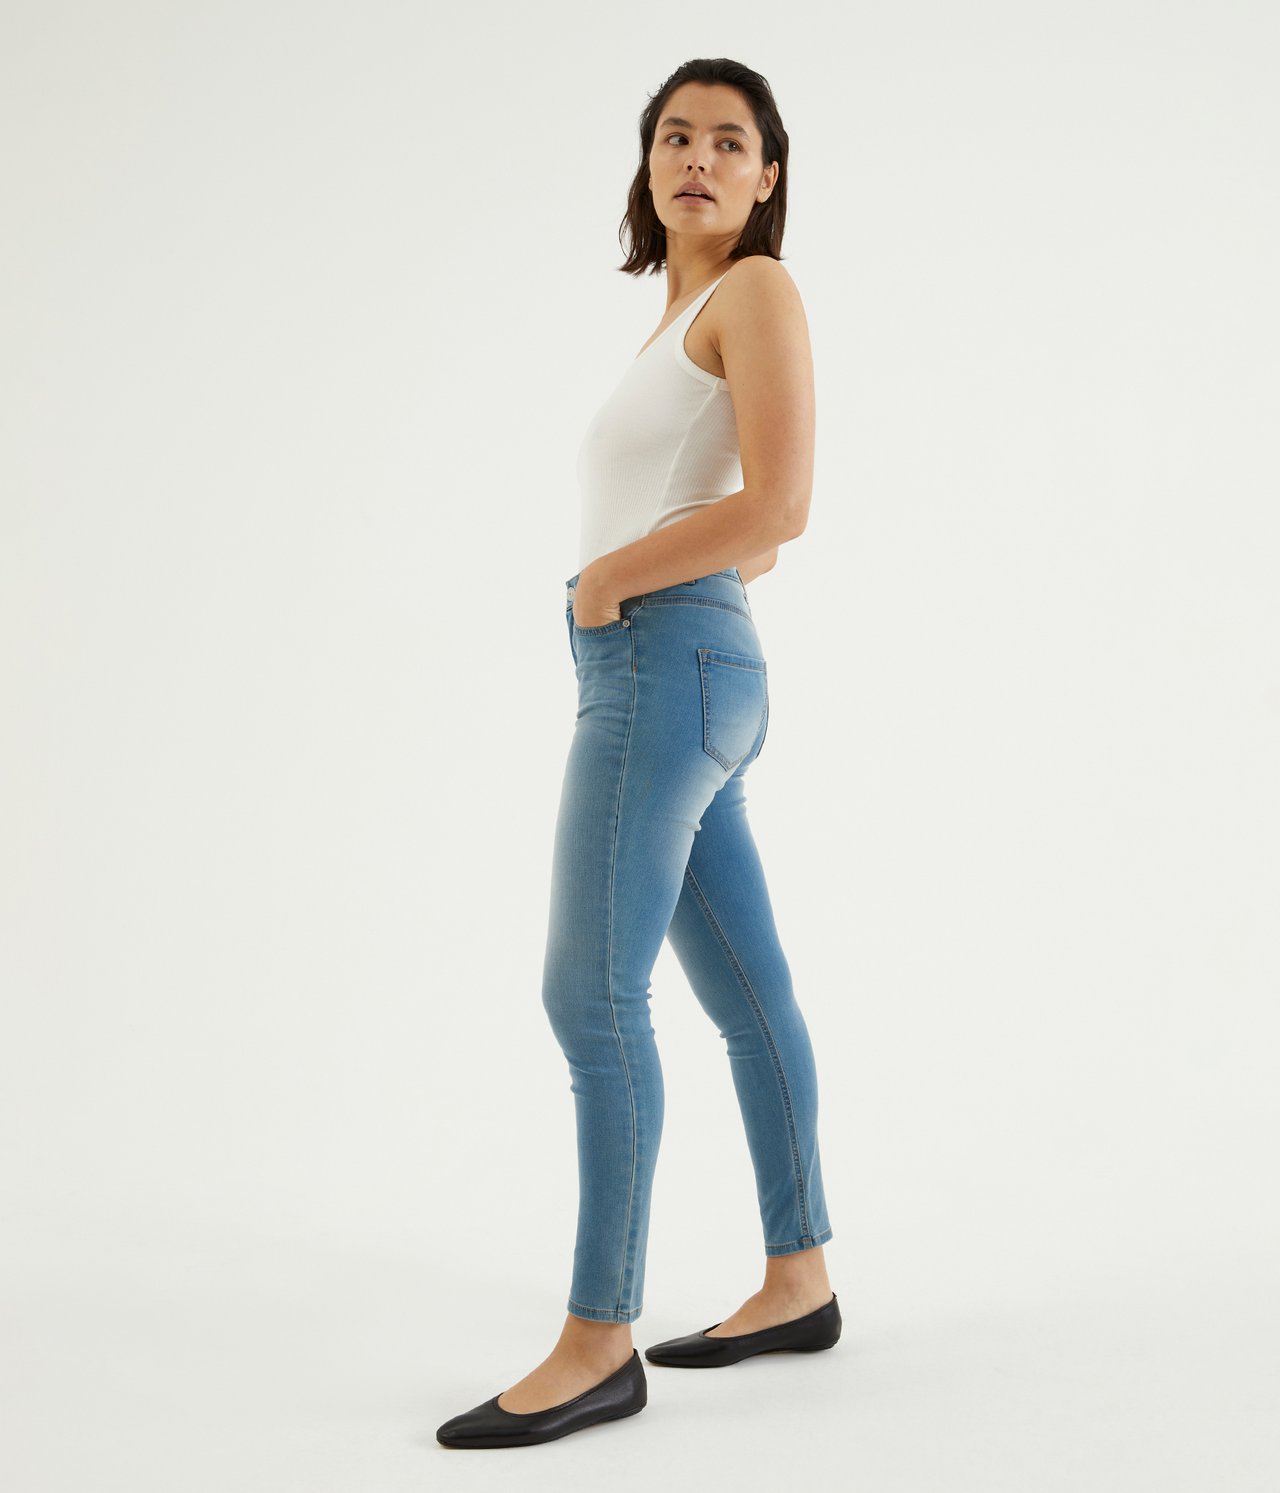 Super slim jeans short leg - Denimi - 4